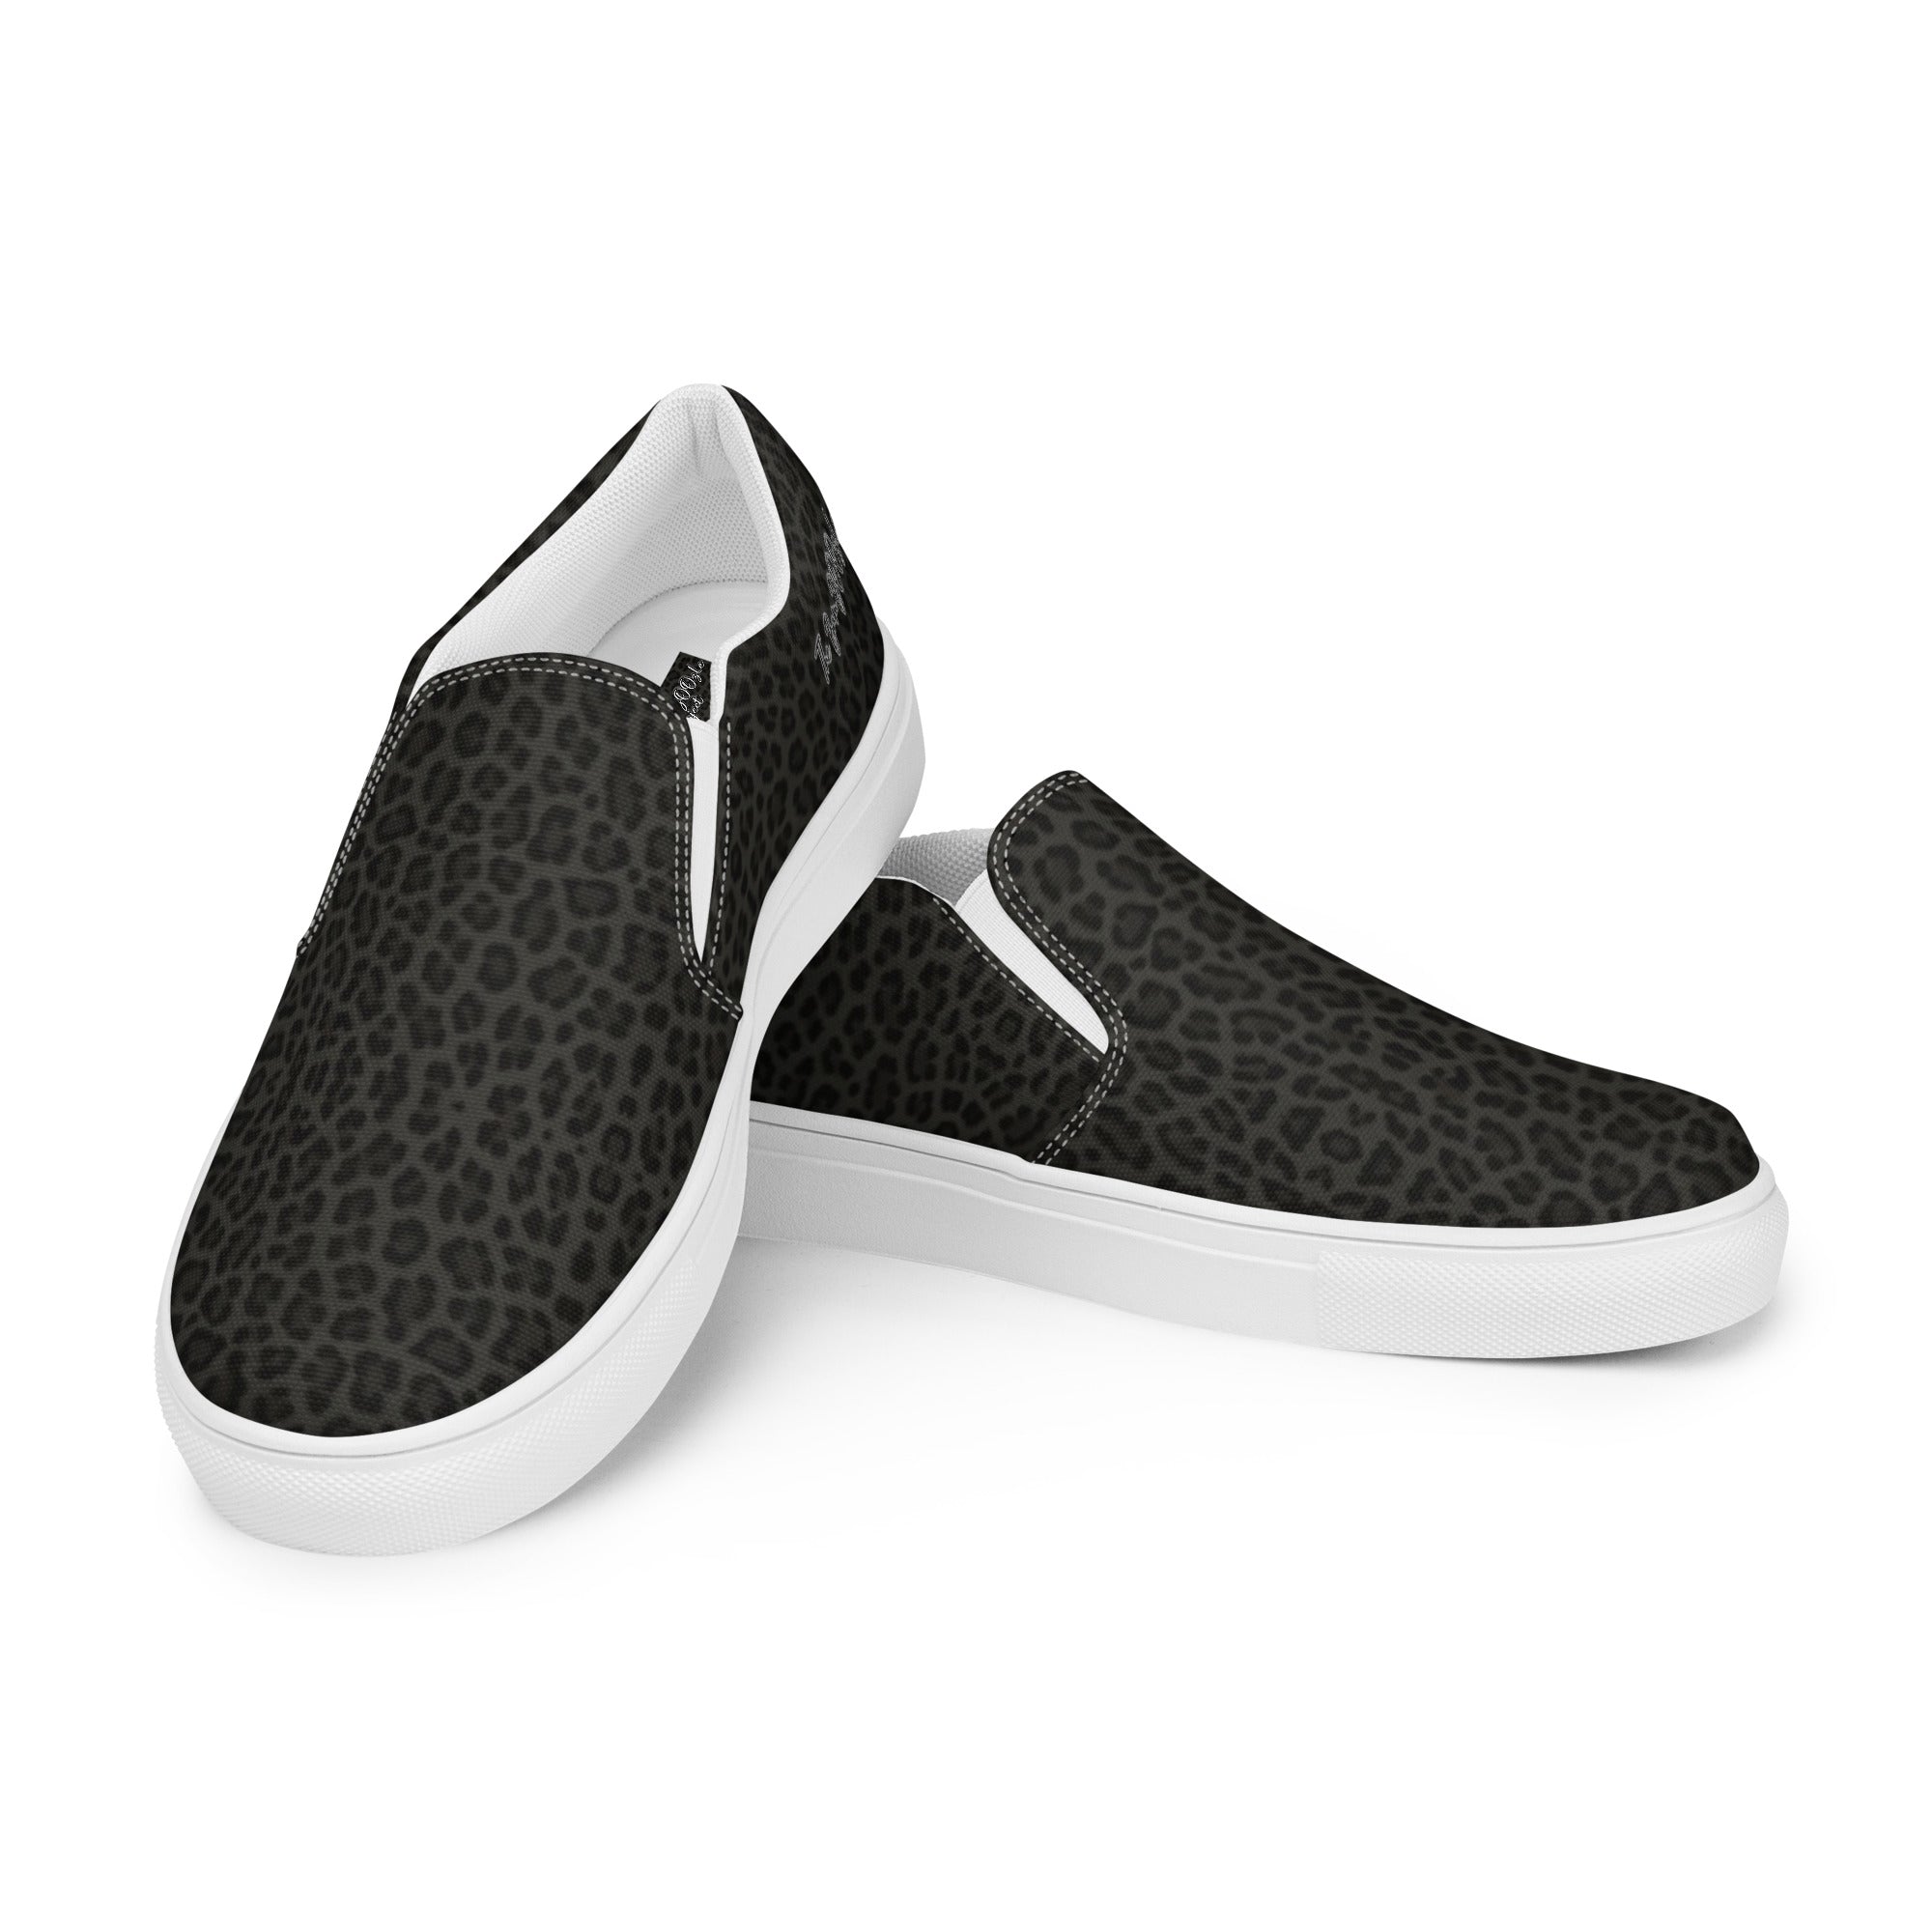 Black Cheetah Men’s slip-on canvas shoes